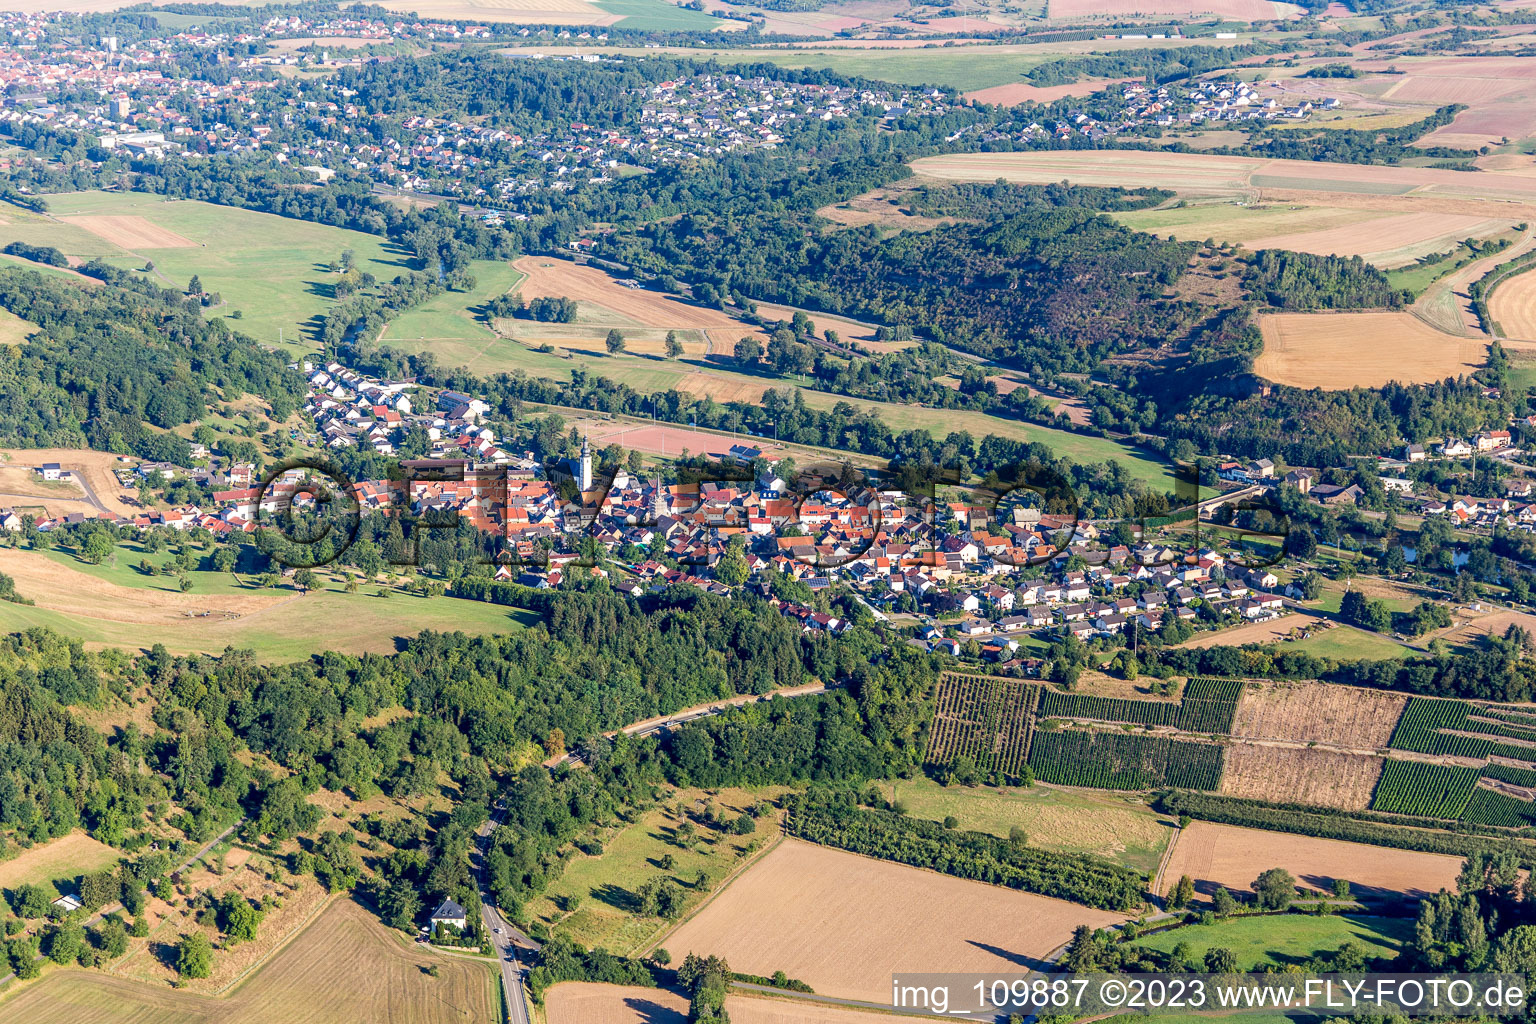 Staudernheim in the state Rhineland-Palatinate, Germany